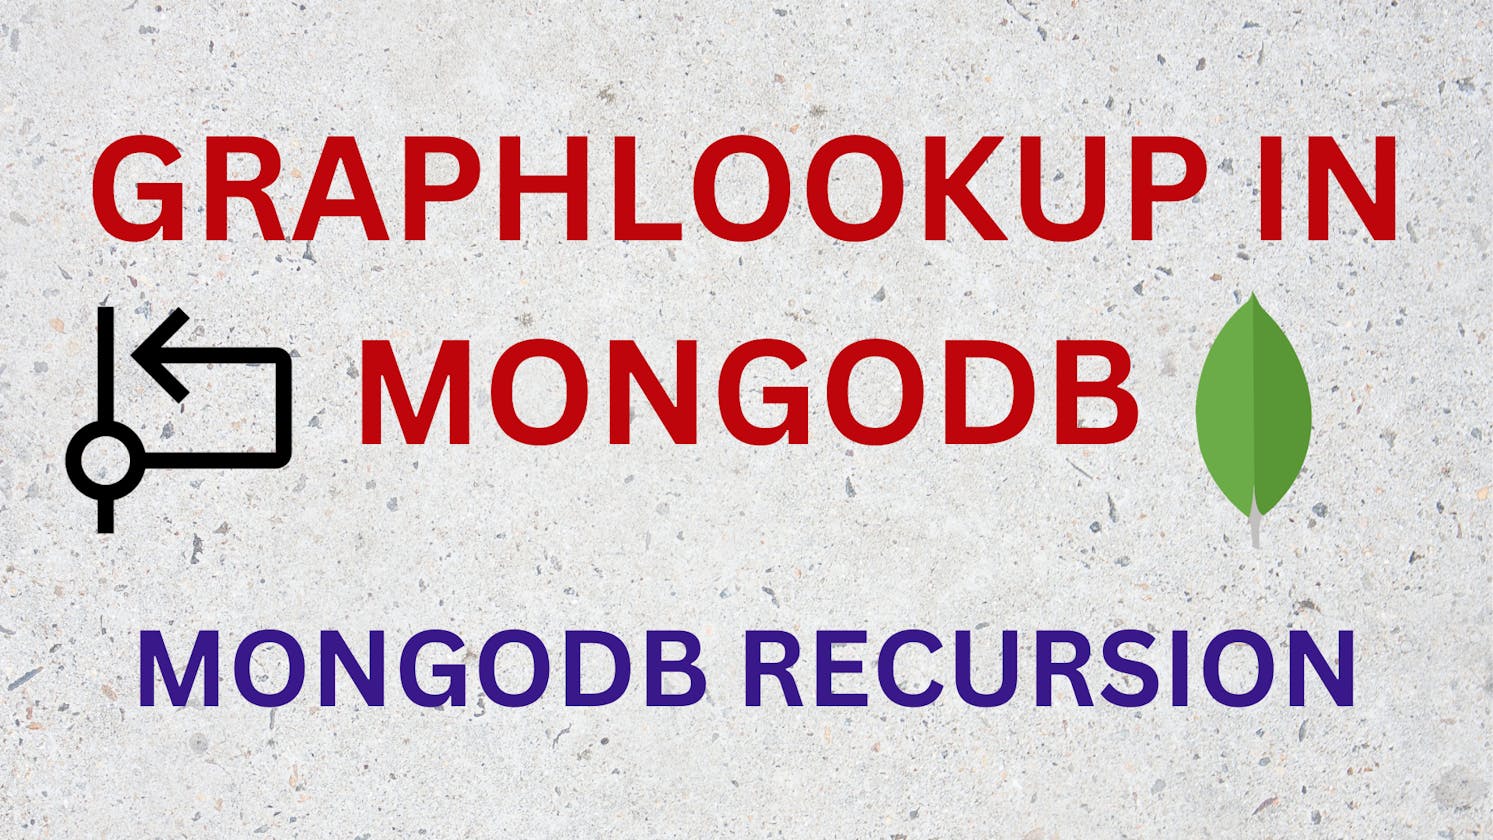 GraphLookup in Mongodb